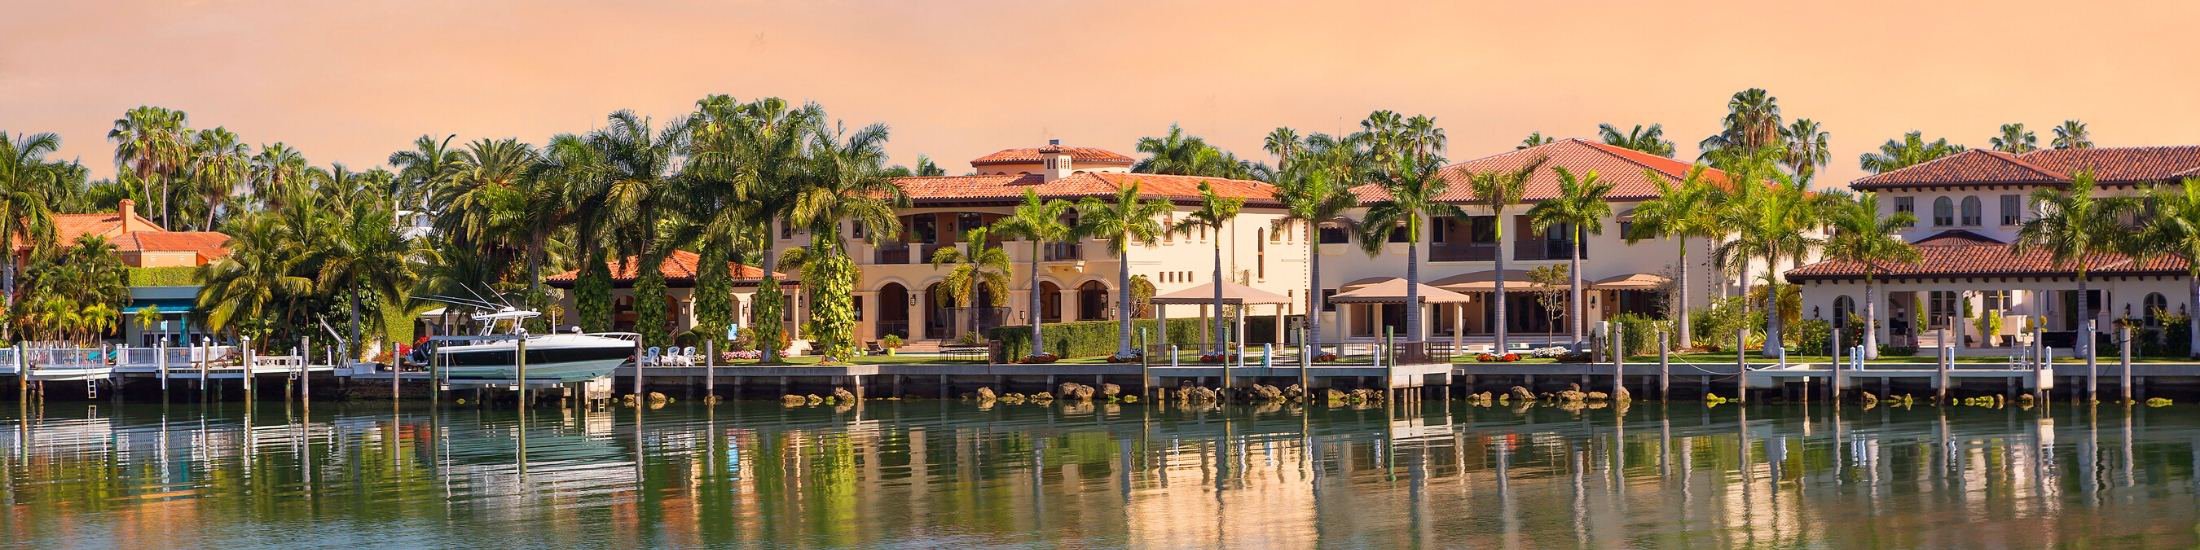 Riviera Golf Estates Homes for Sale